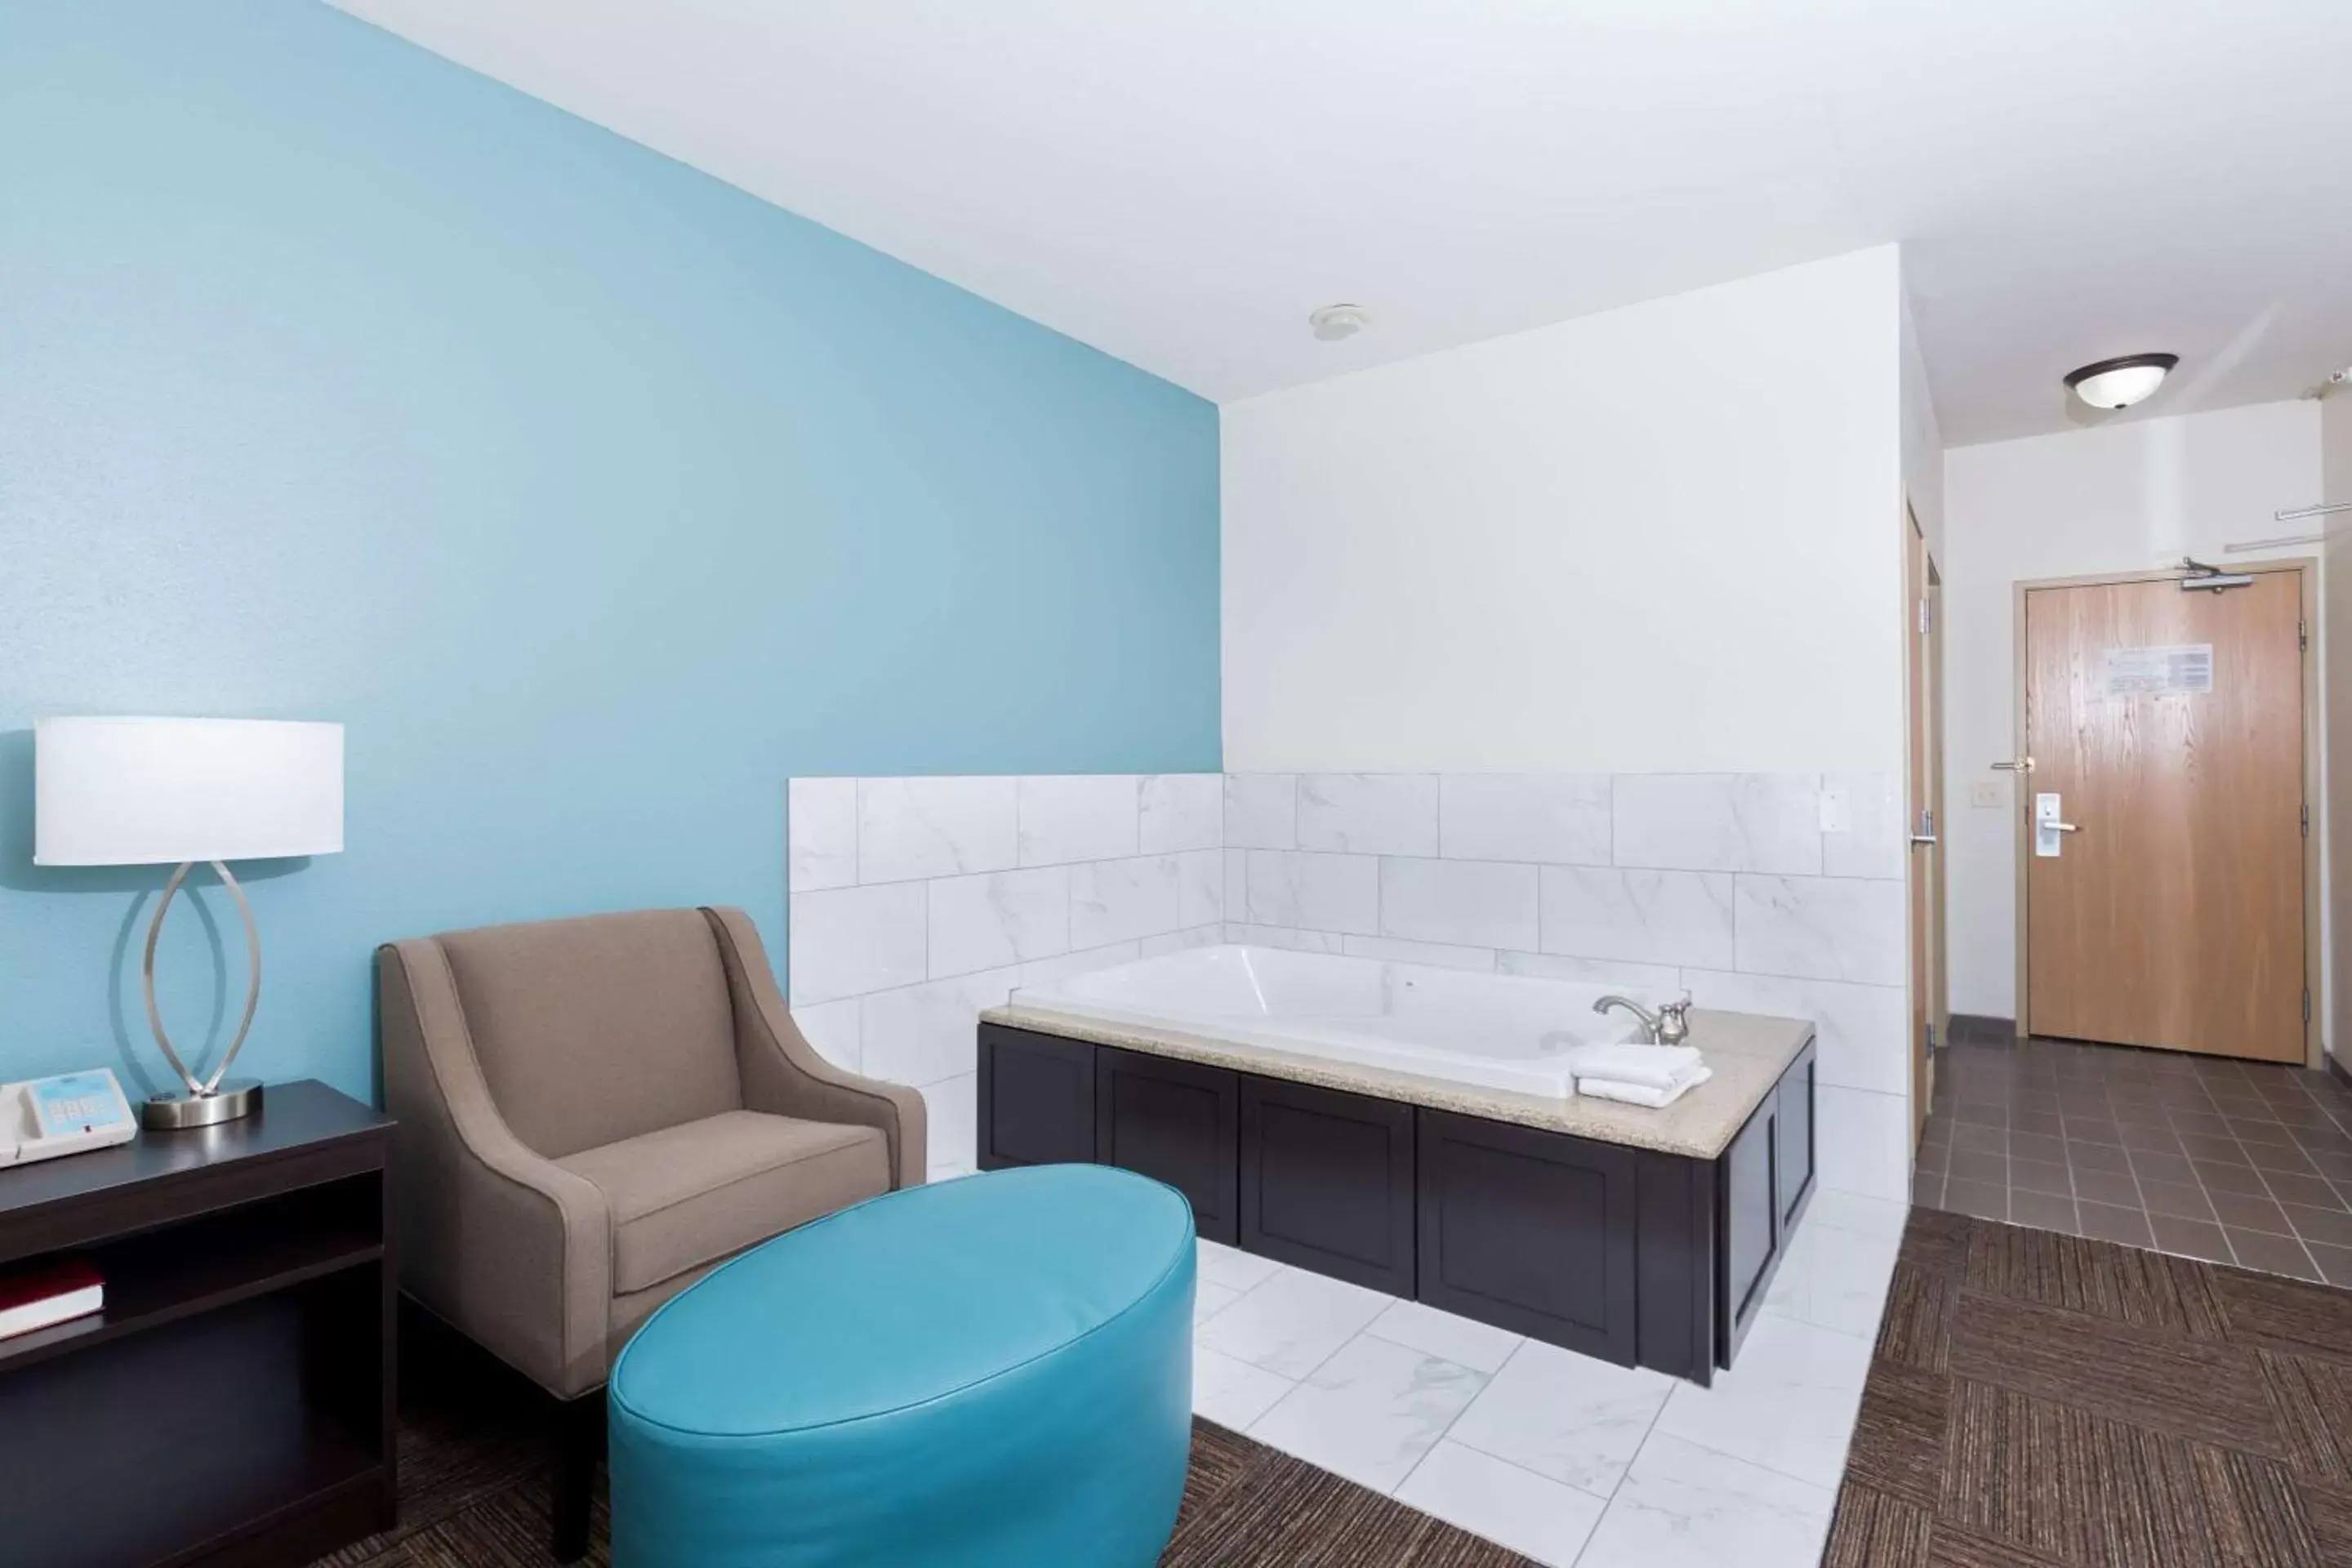 Photo of the whole room, Bathroom in Sleep Inn & Suites Washington near Peoria